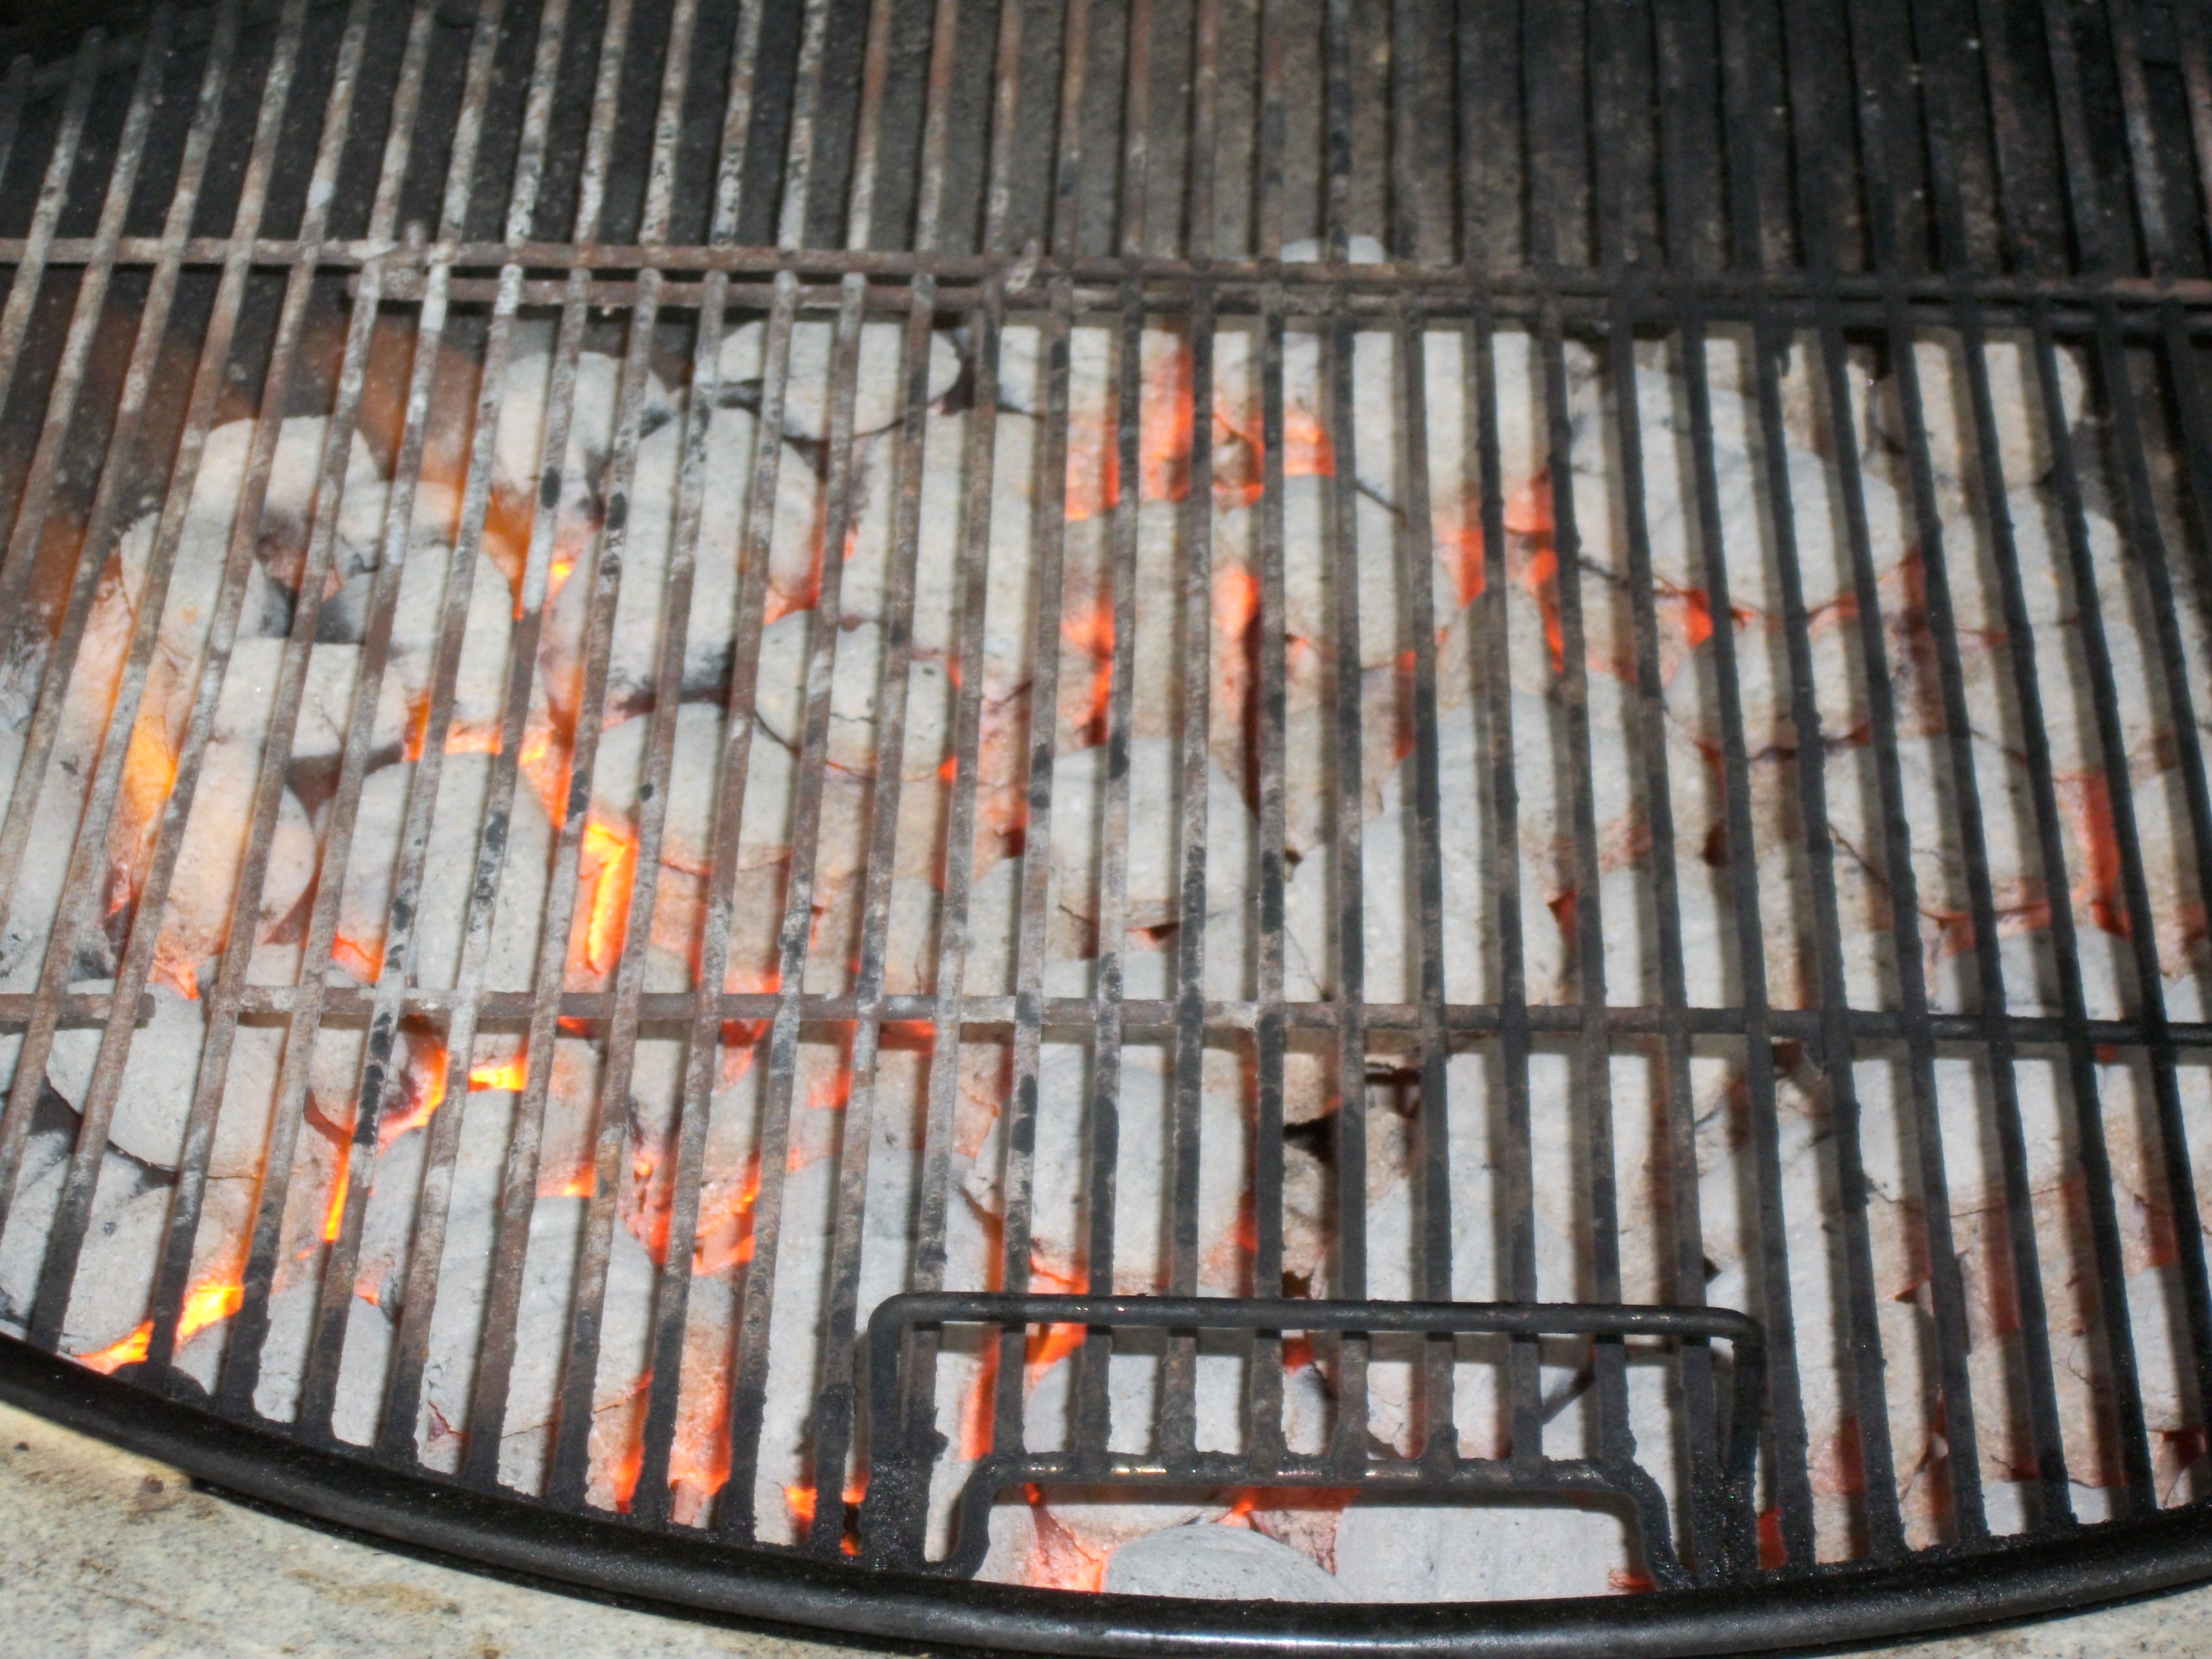 Hot coals in grill photo